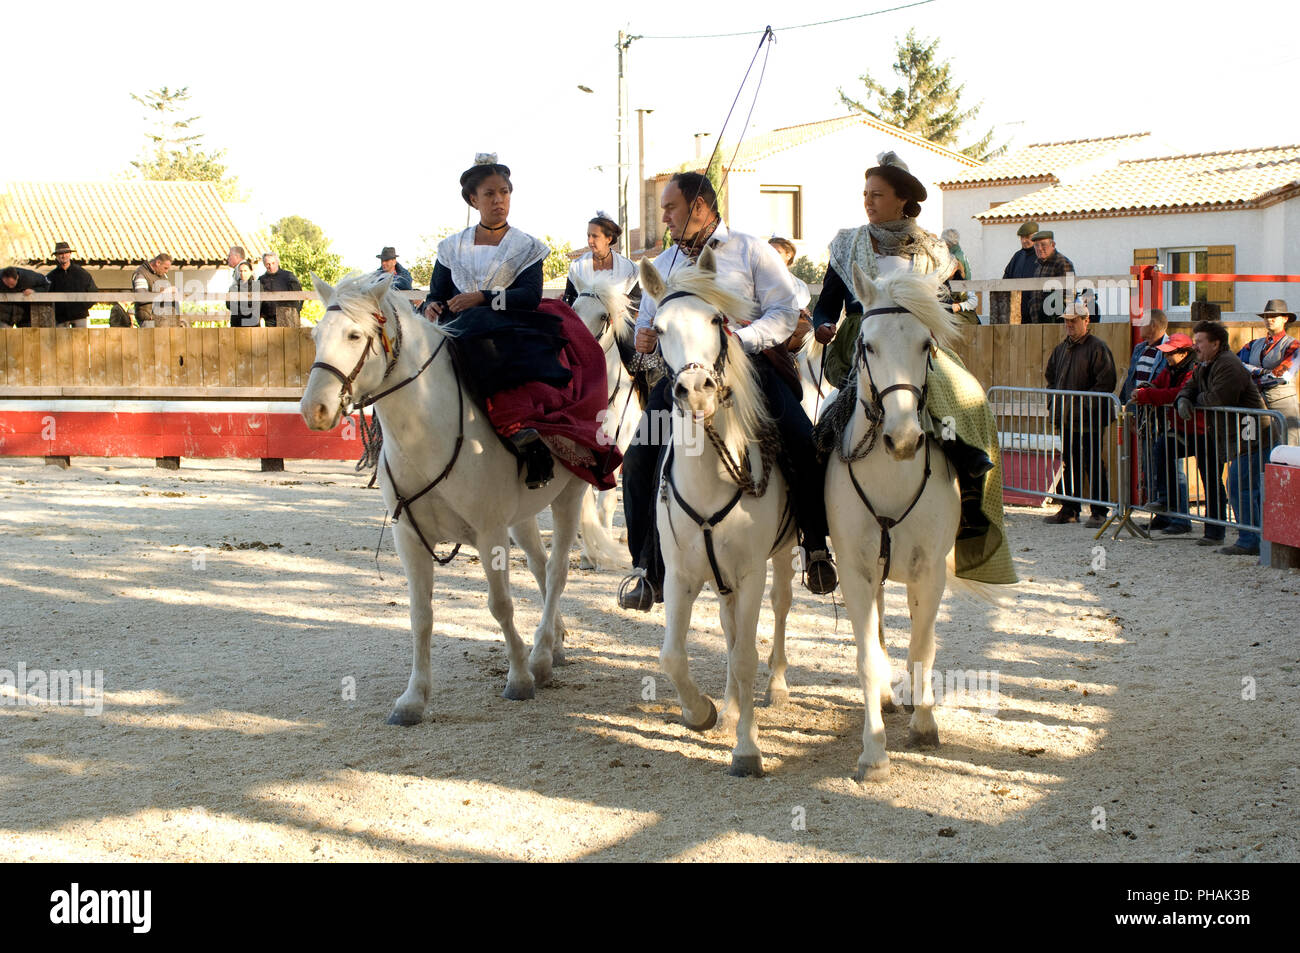 Arlesiennes et gardian sur cheval Camargue - Arlesiennes et gardian riding horse of camargue (Gard) - France Stock Photo